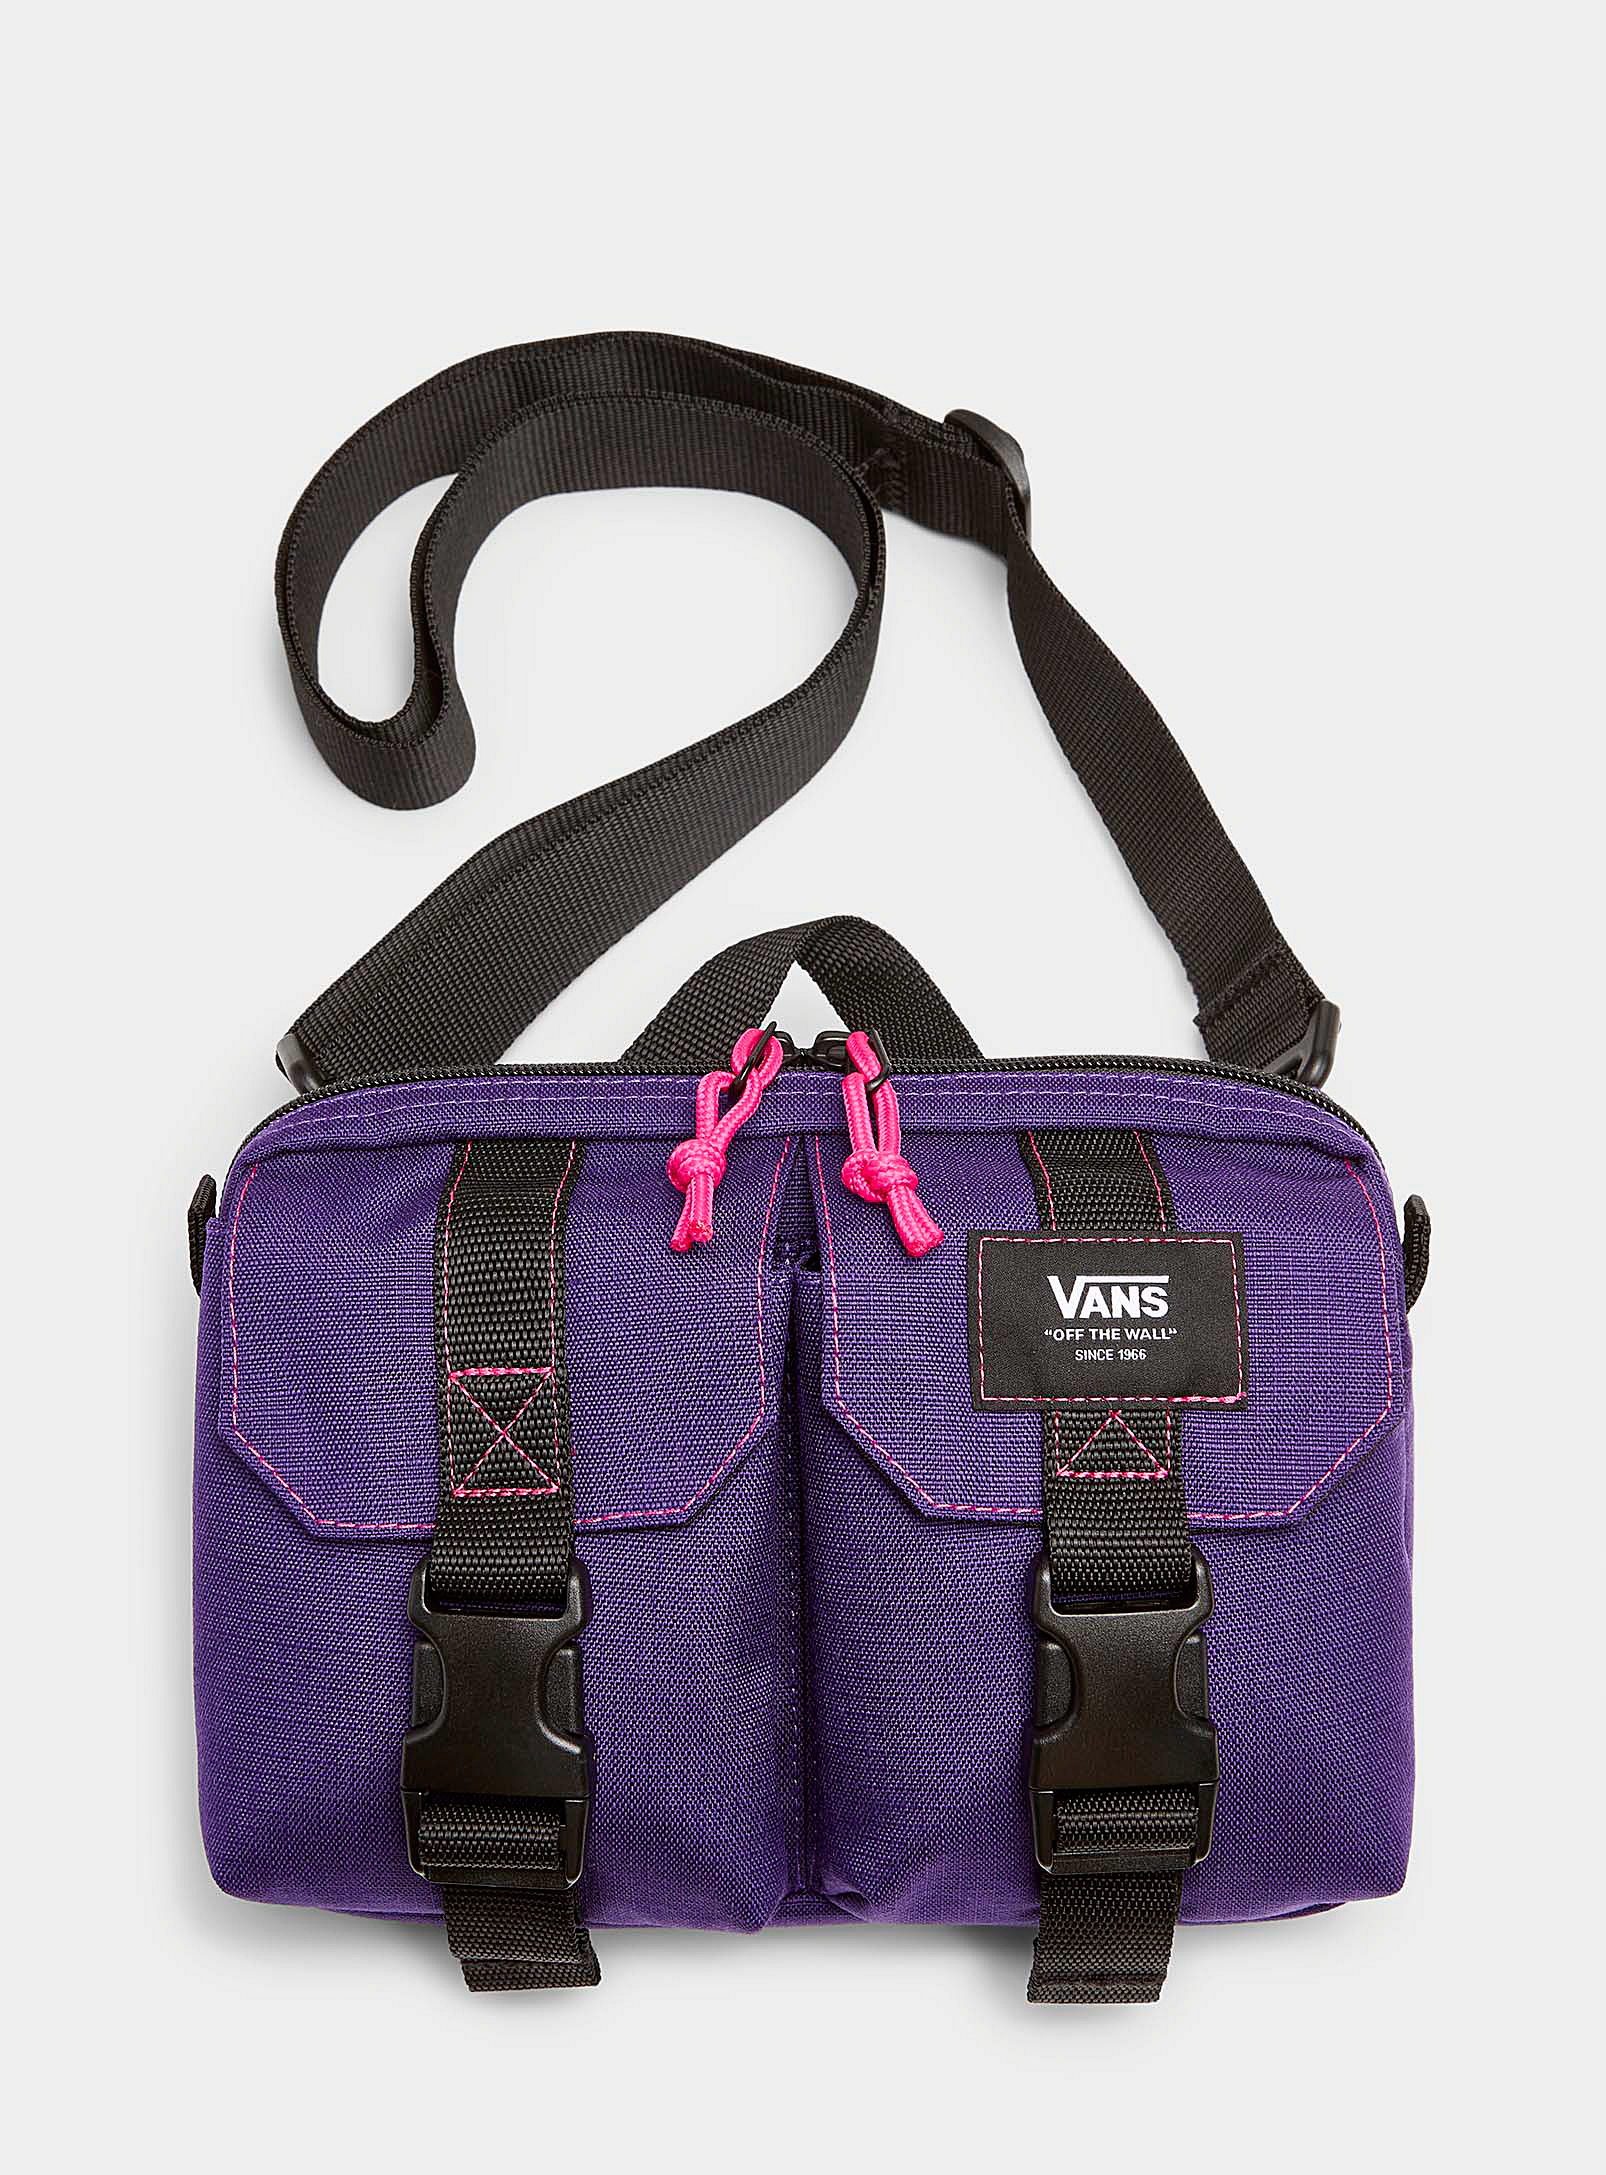 Vans - Men's Persue shoulder bag